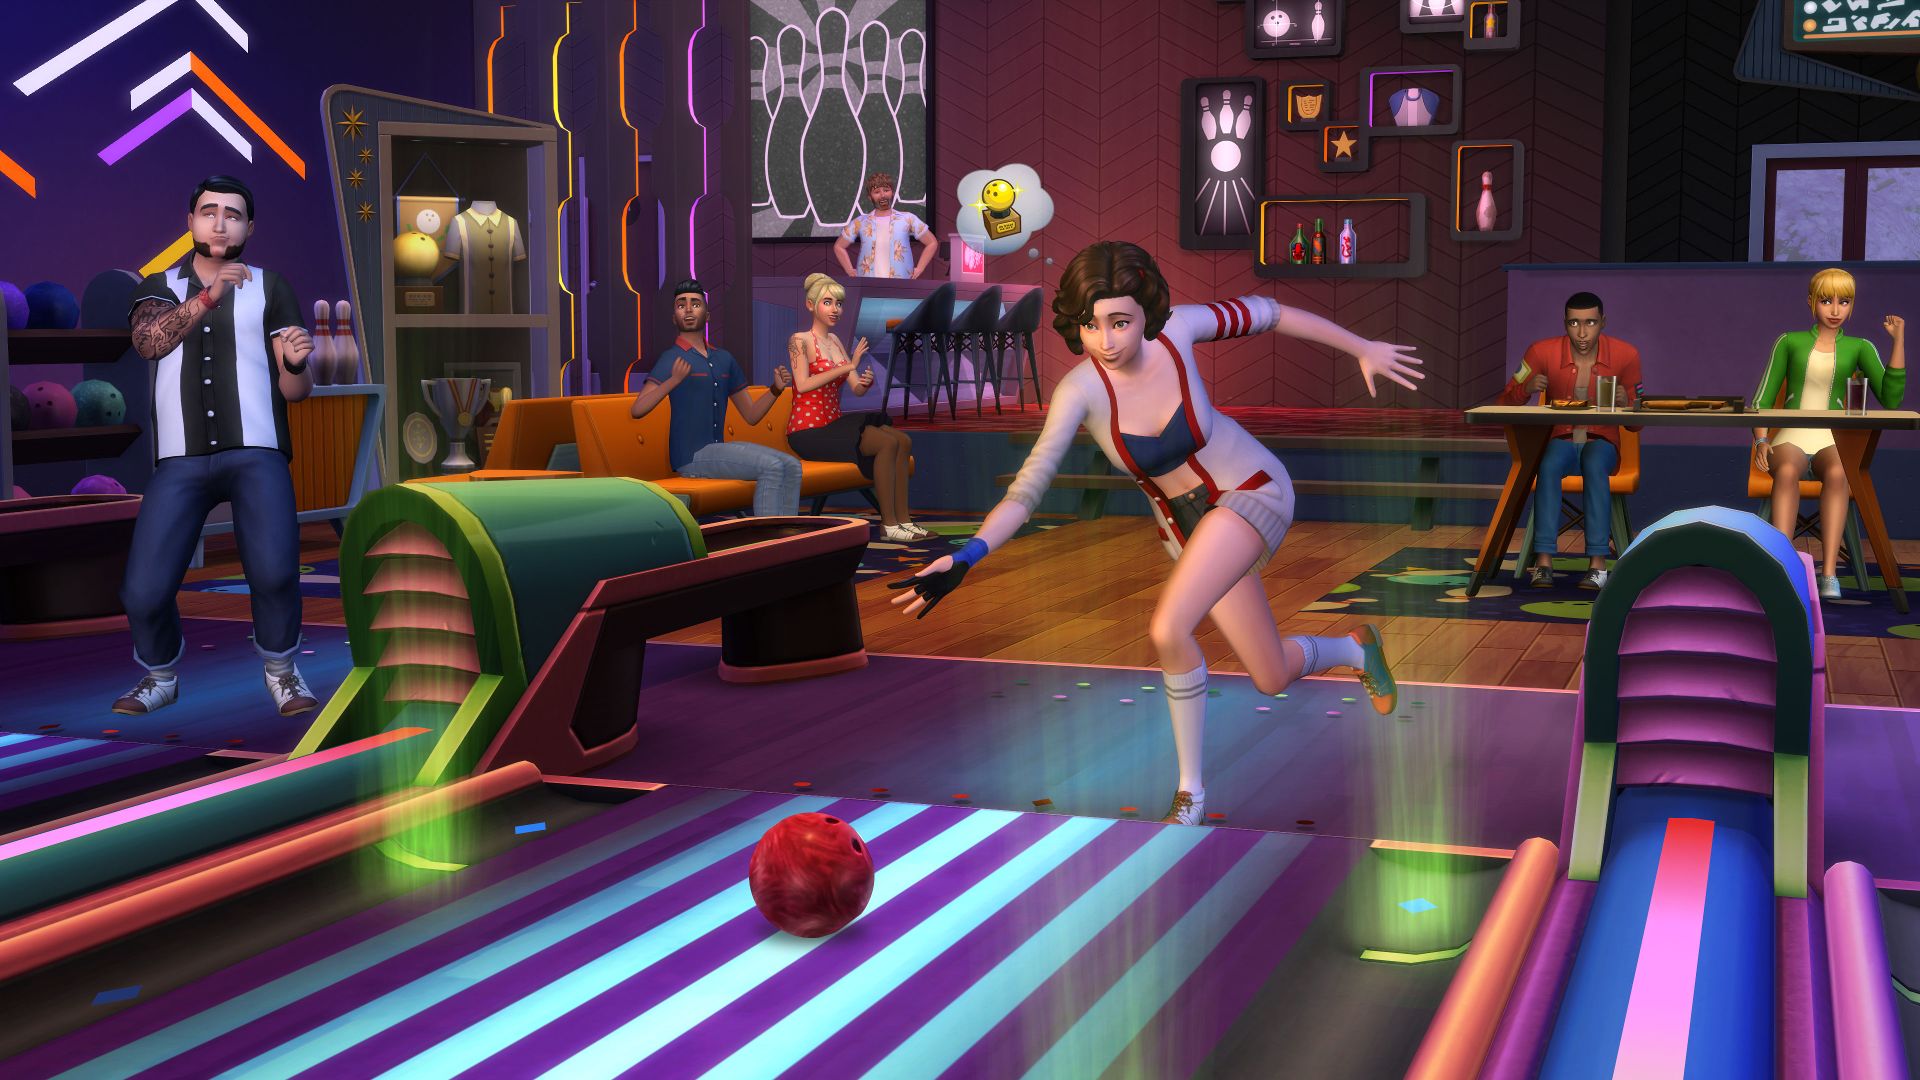 The Sims 4 Bowling Night Setup Free Download